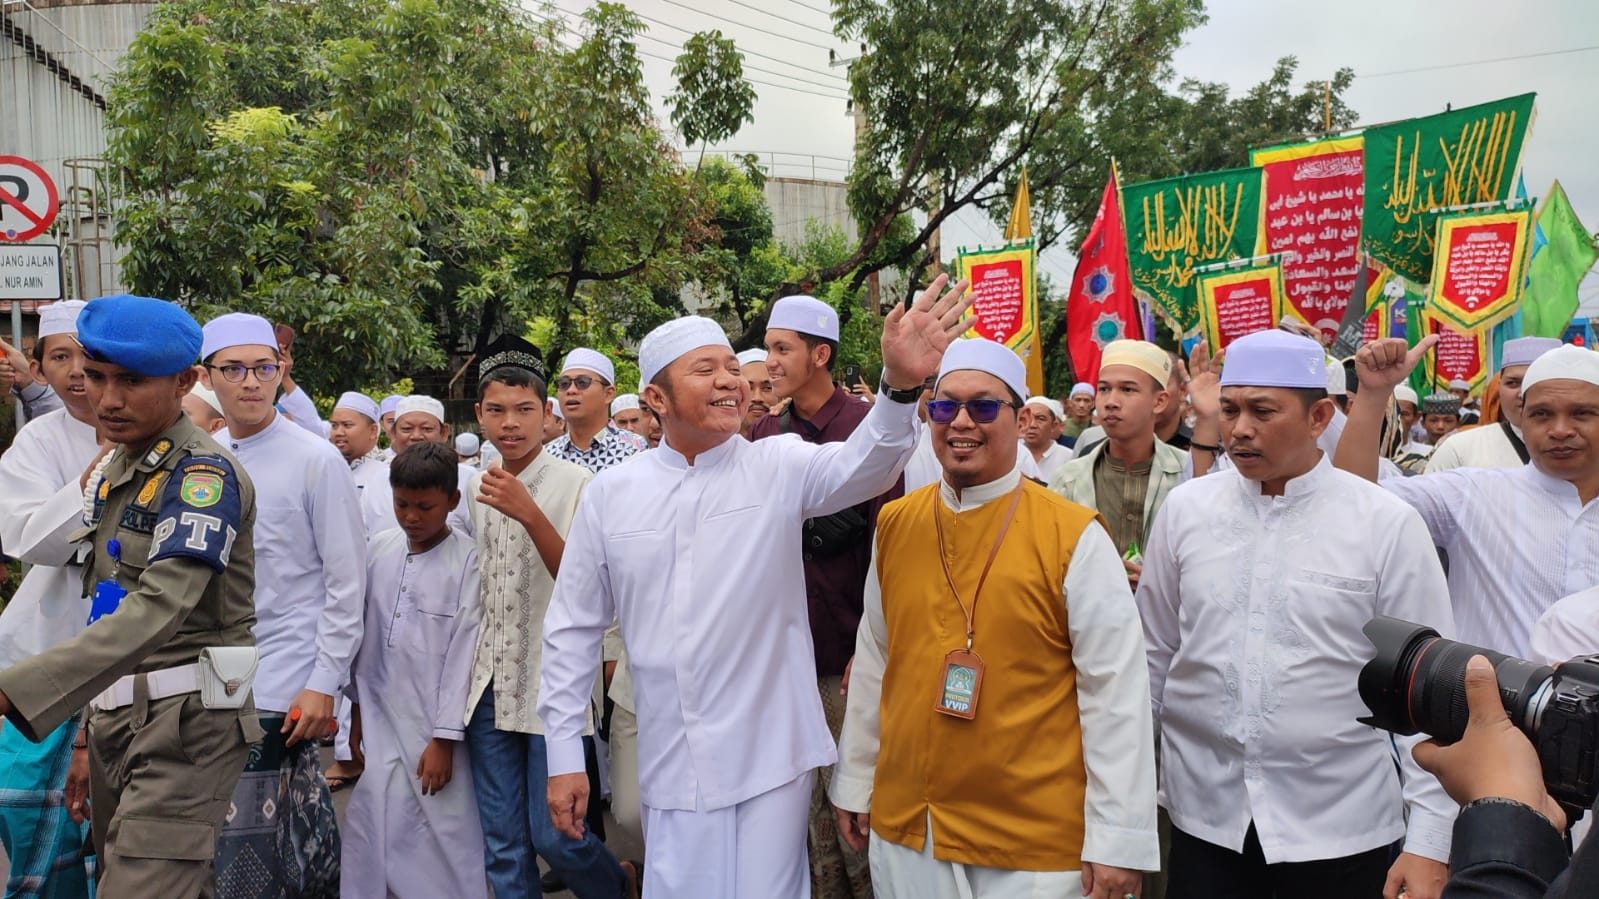  Gubernur Sumsel Hadiri Puncak Acara Ziarah Kubra Ulama & Auliya Palembang Darussalam